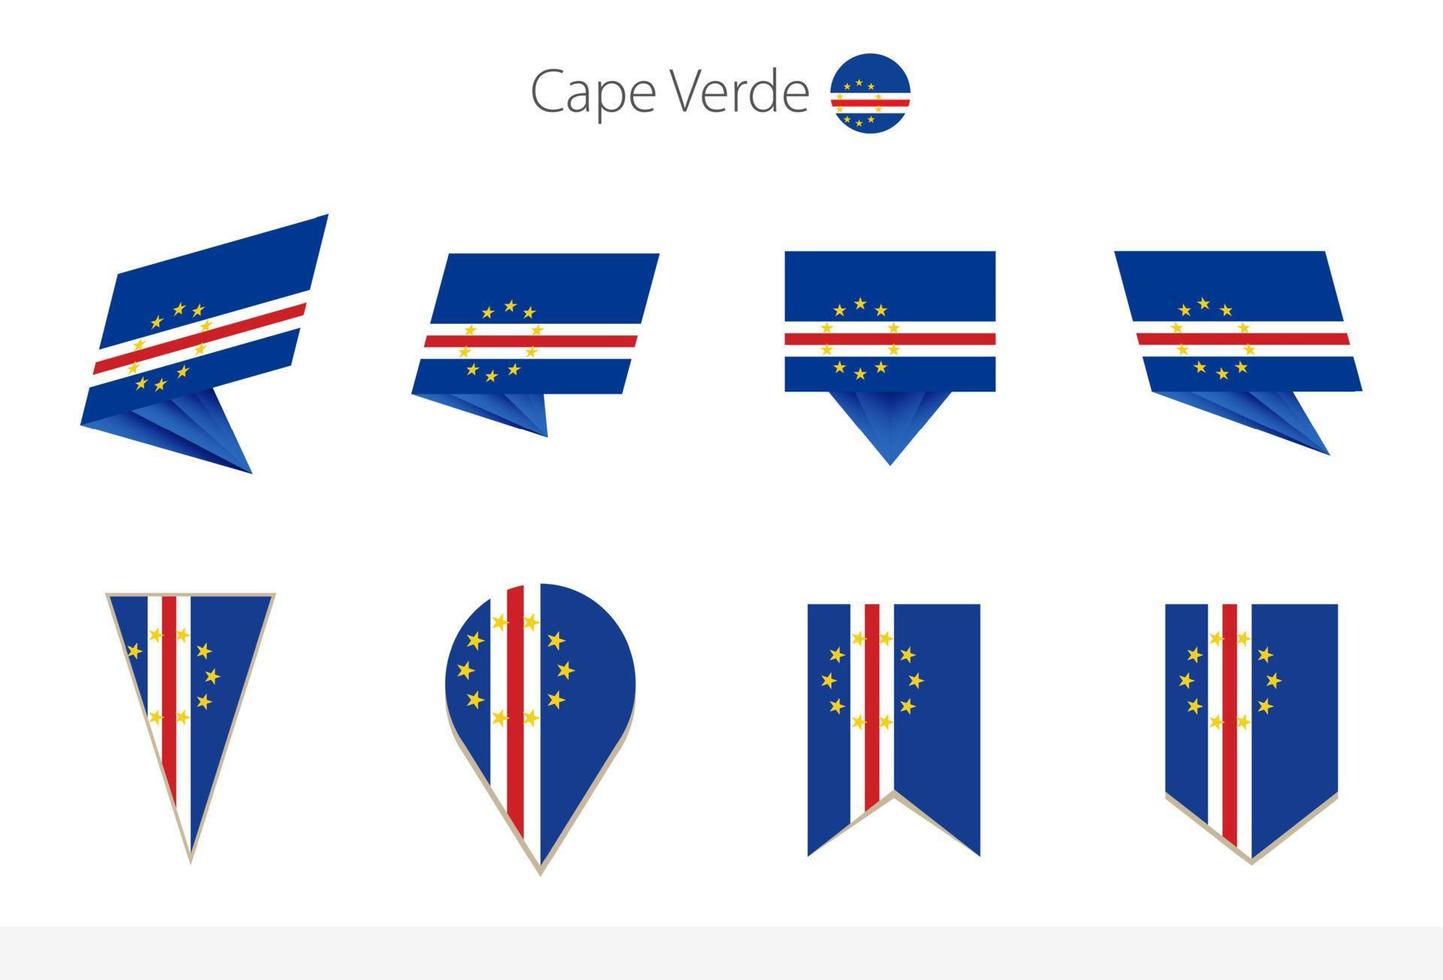 cape verde nationell flagga samling, åtta versioner av cape verde vektor flaggor.